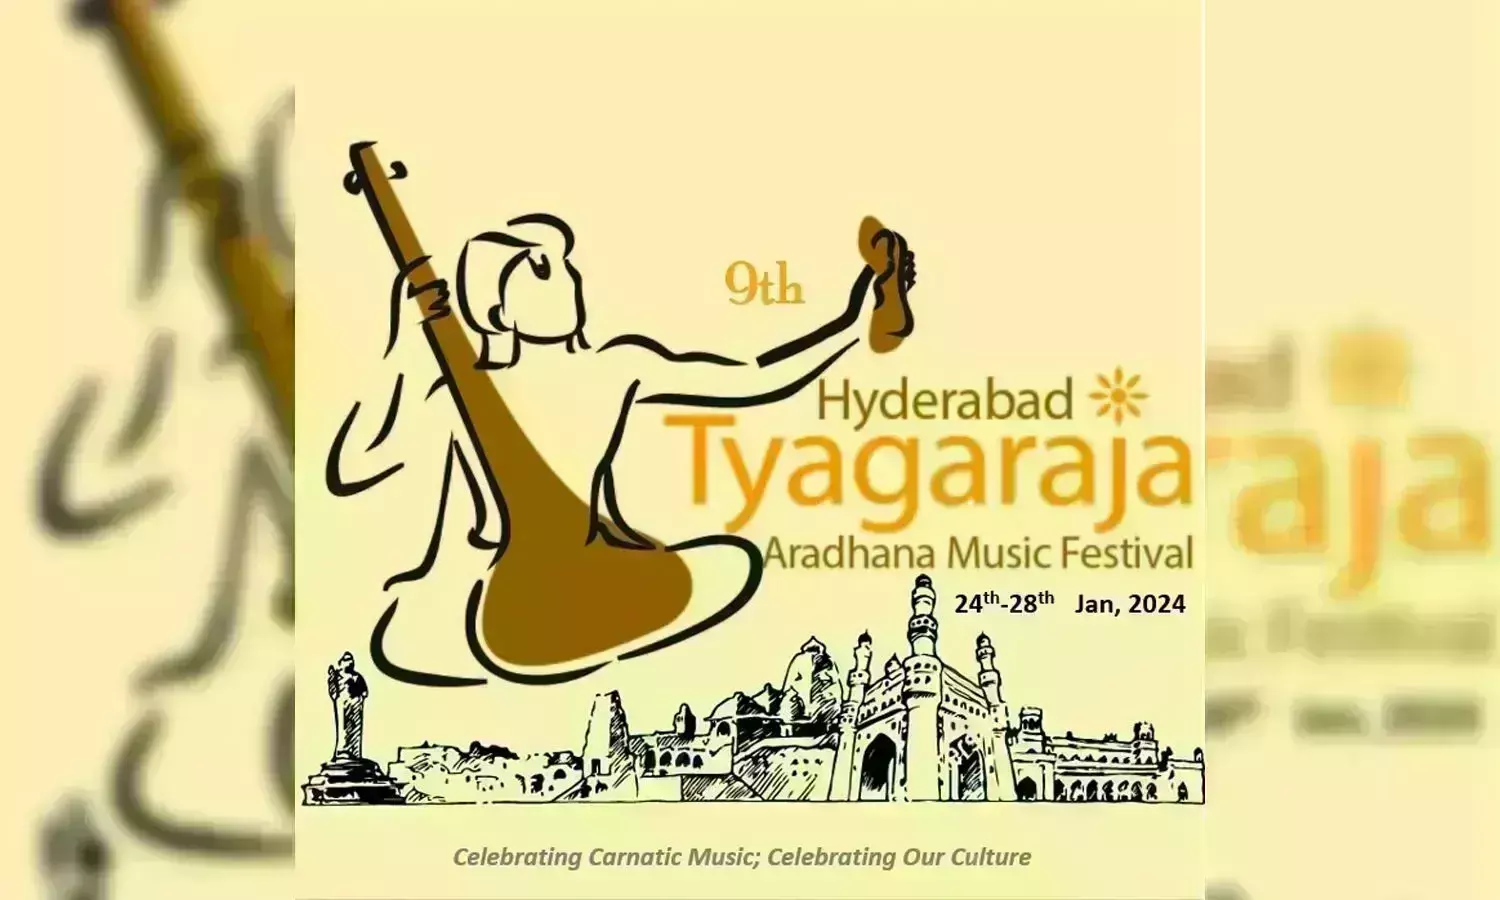 Hyderabad Tyagaraja Aradhana Music festival kicks off with enchanting performances